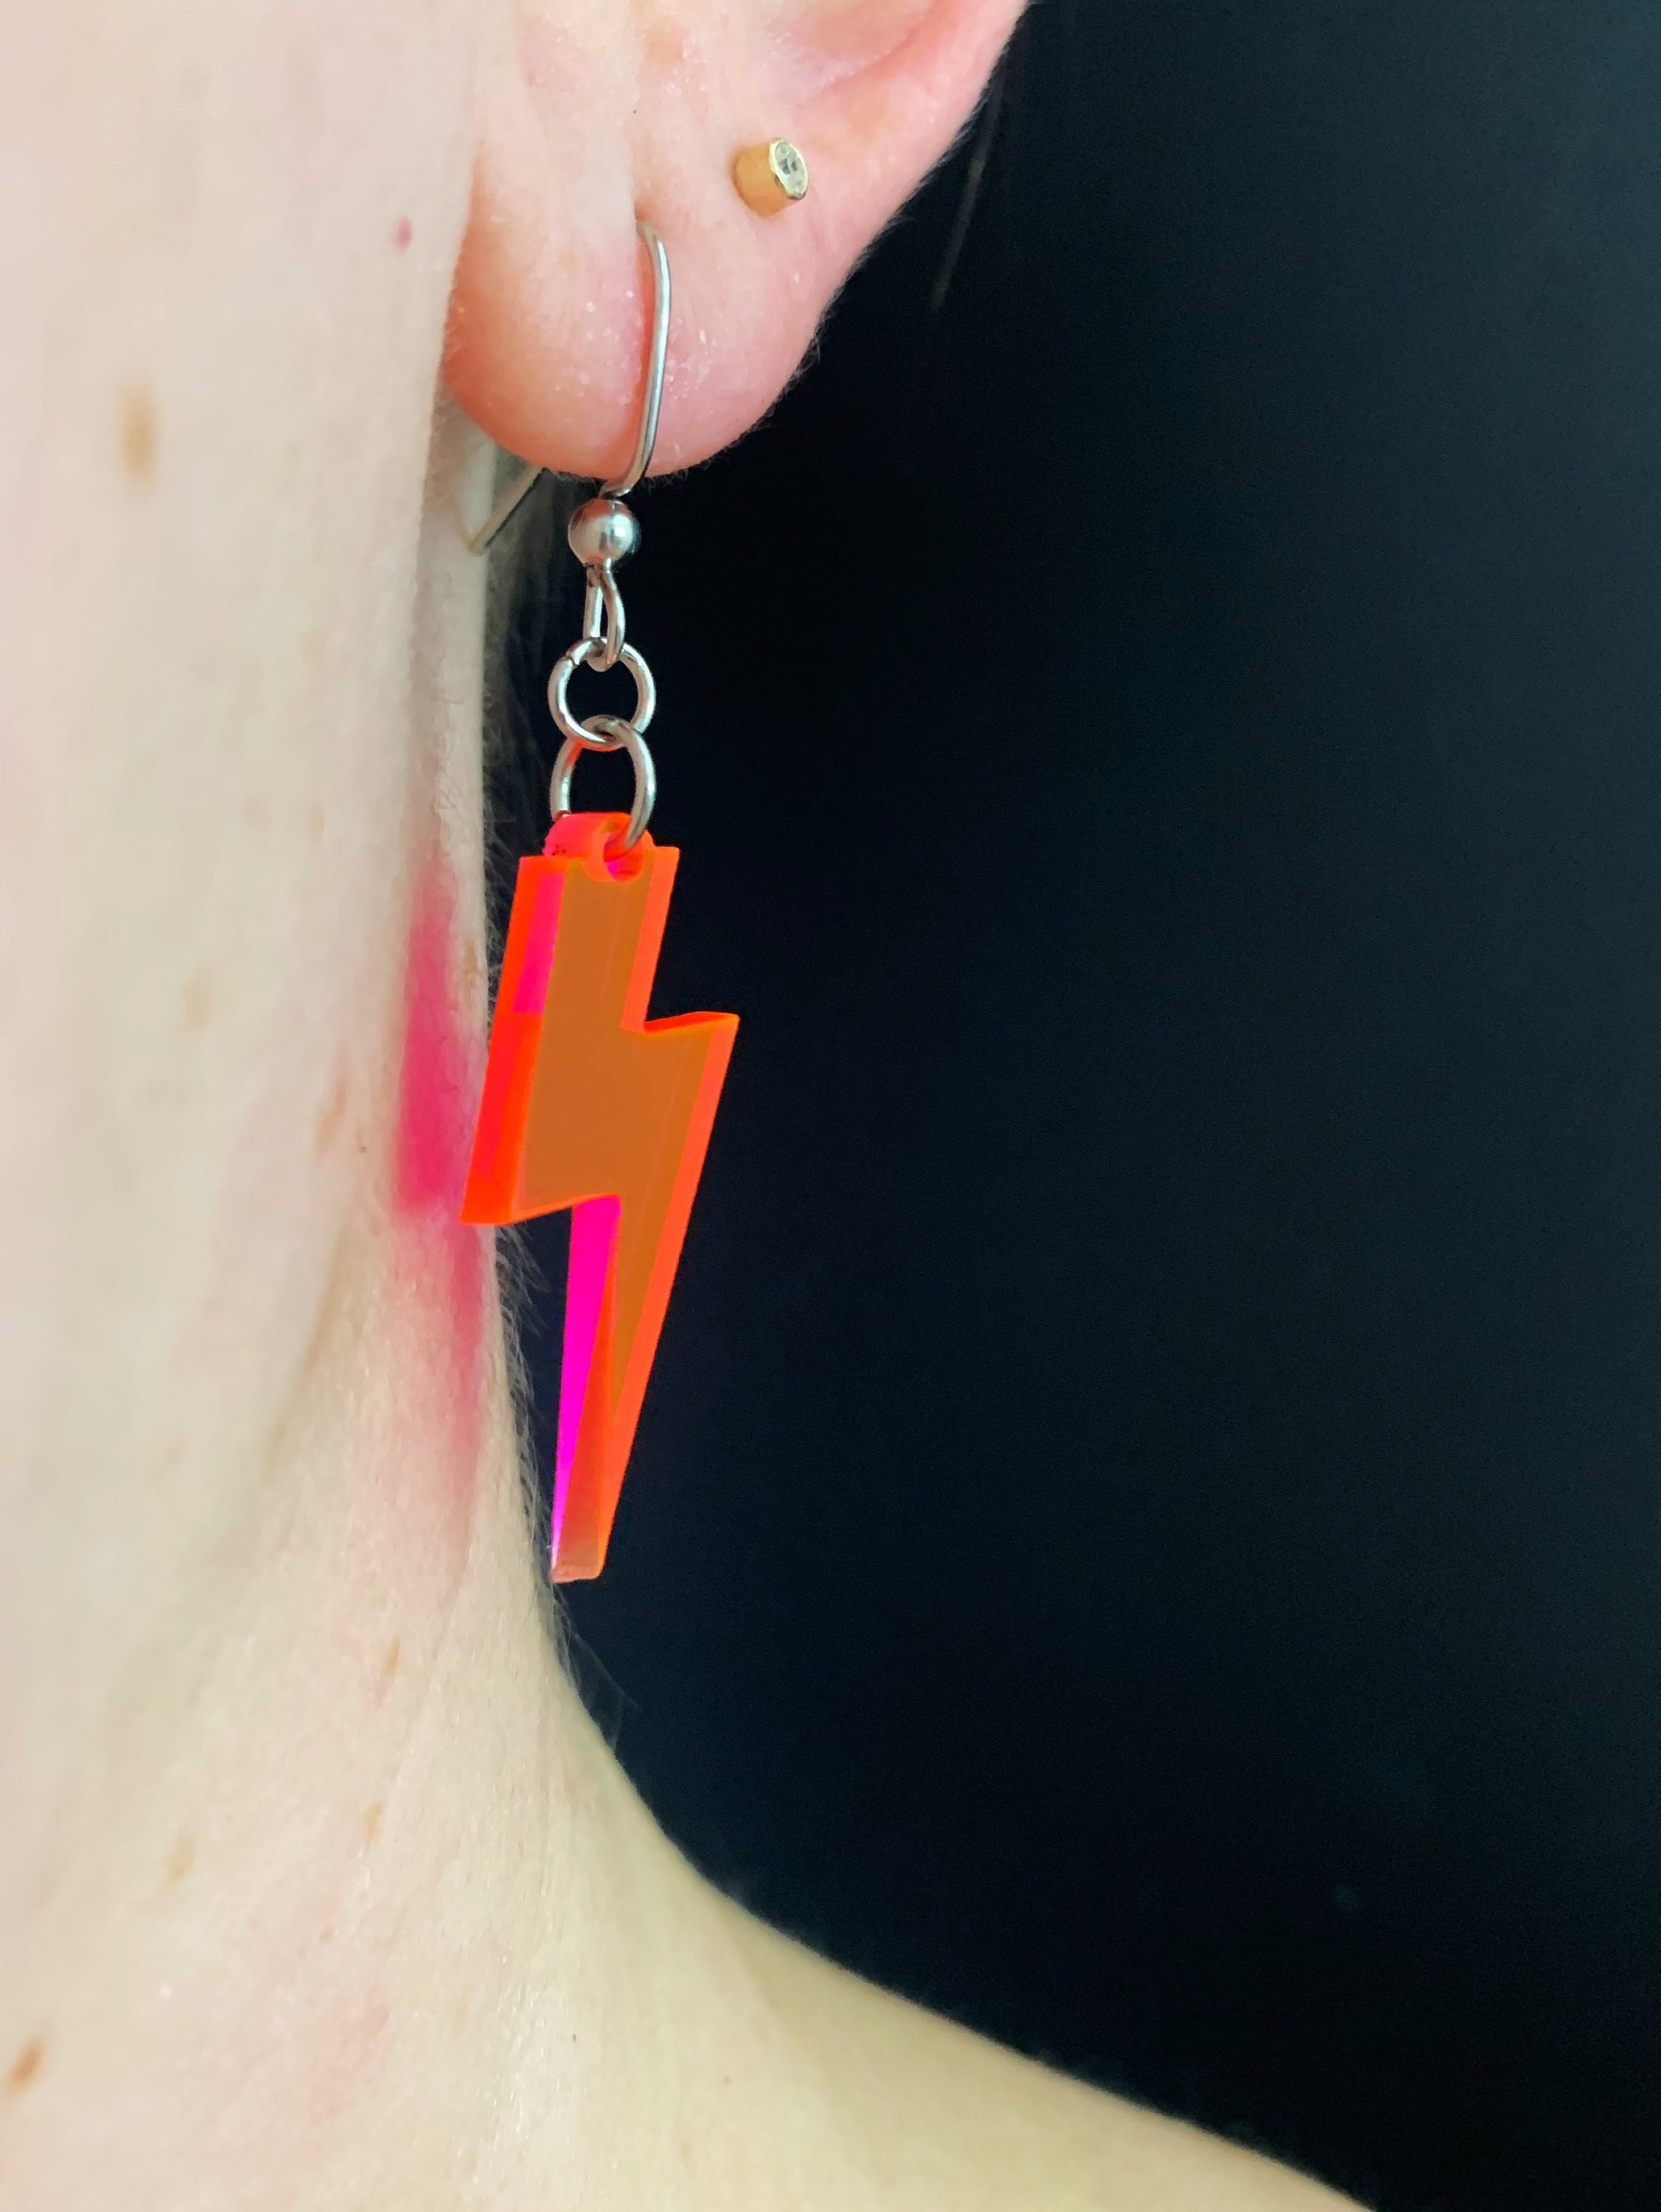 Buy Neon Lightning Bolt Earrings Flashy Fluorescent Acrylic Online in India   Etsy